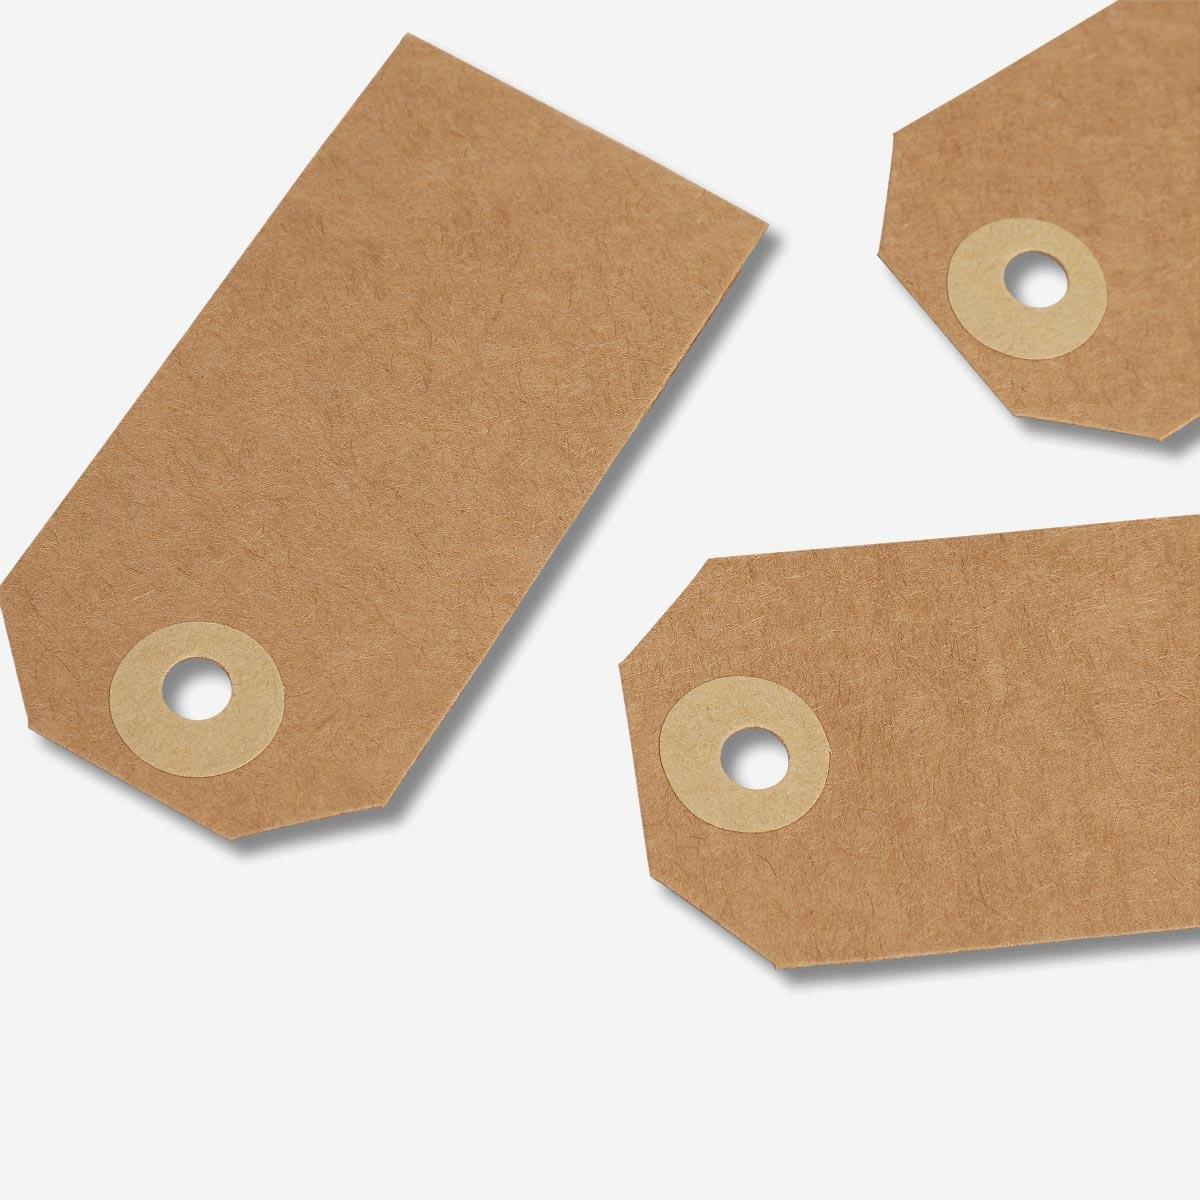 Brown cardboard manilla tags